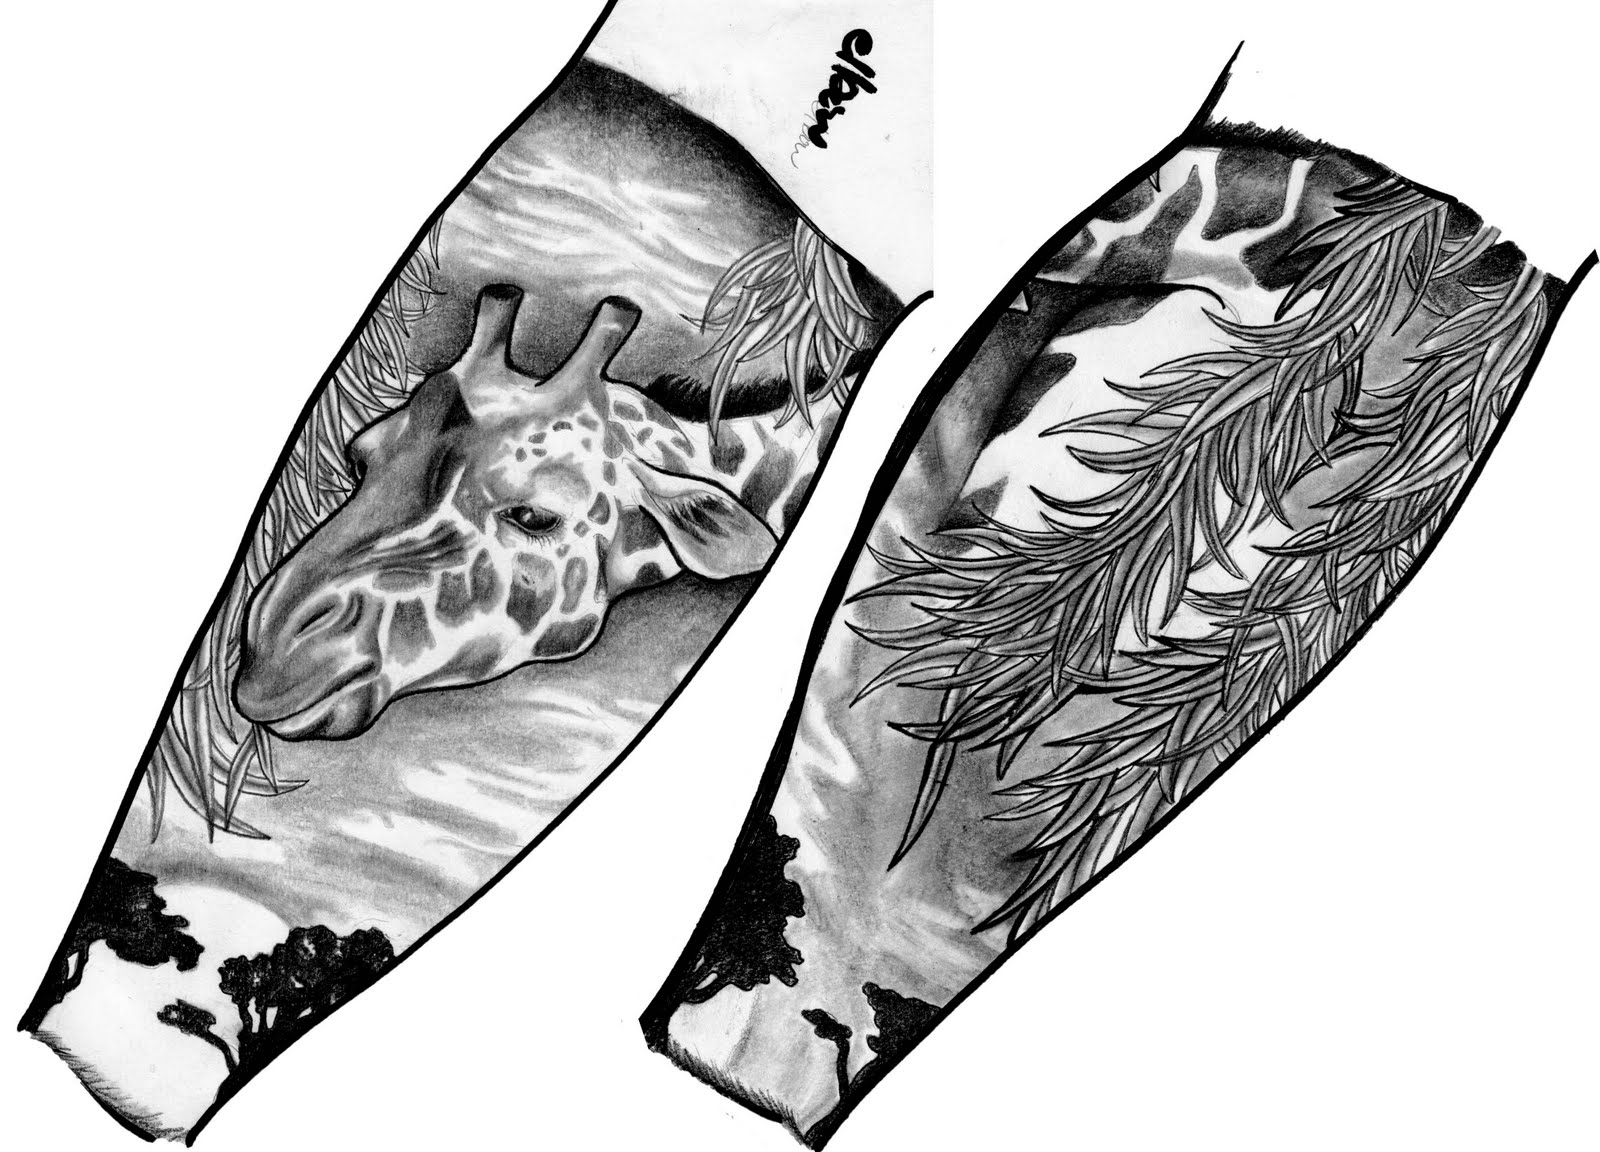 quarter sleeve tattoo